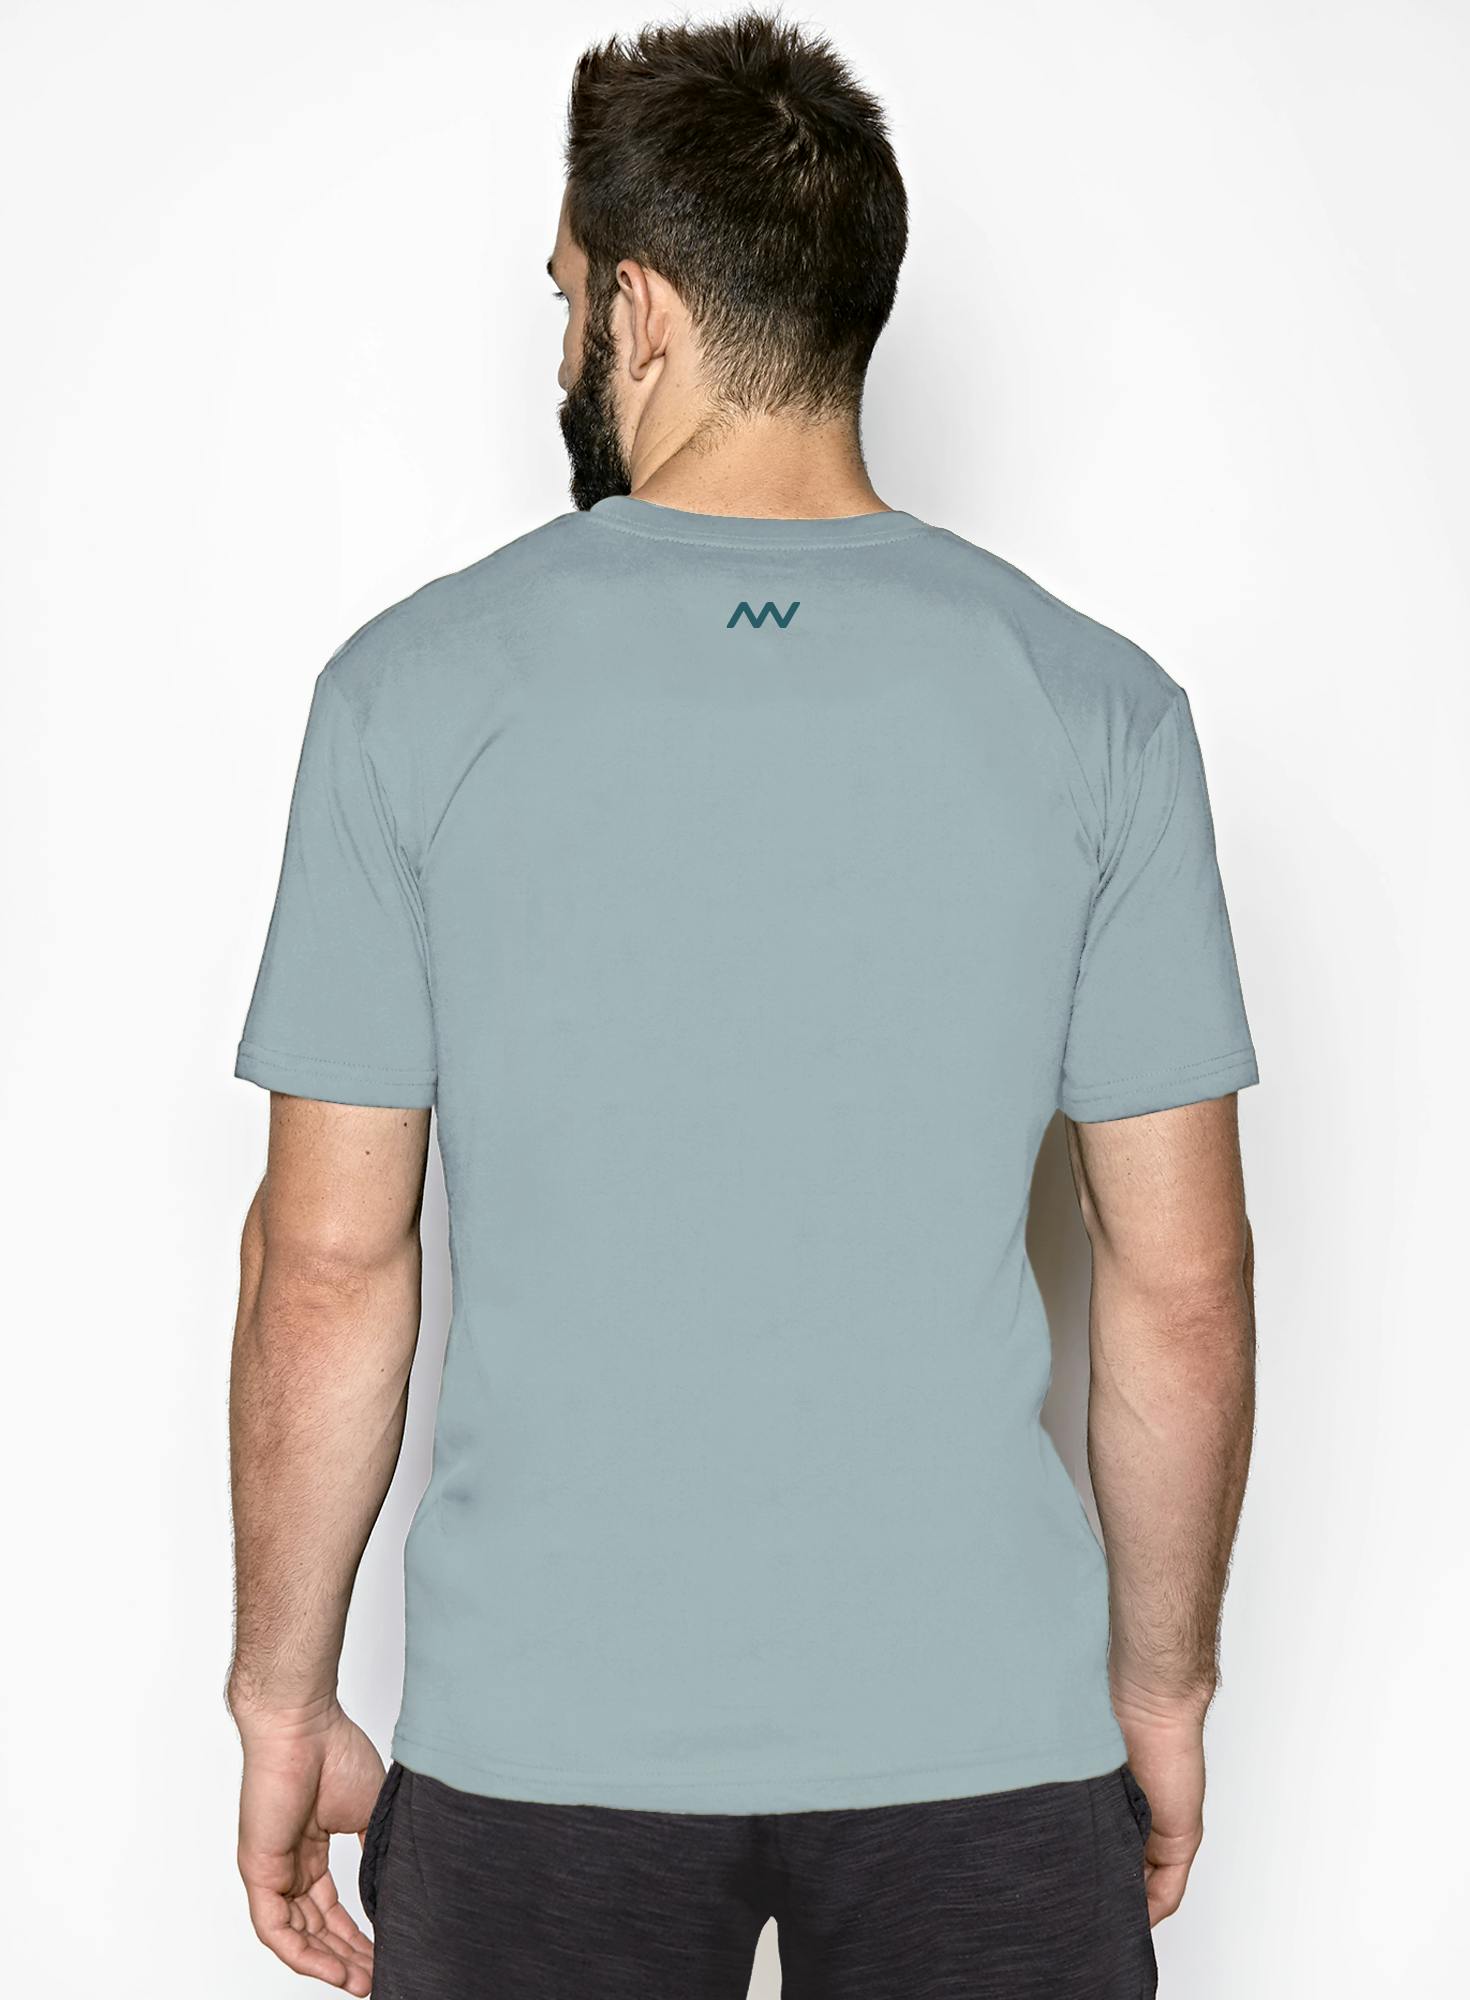 Onnit Capsule Texture T-Shirt Bonus Image